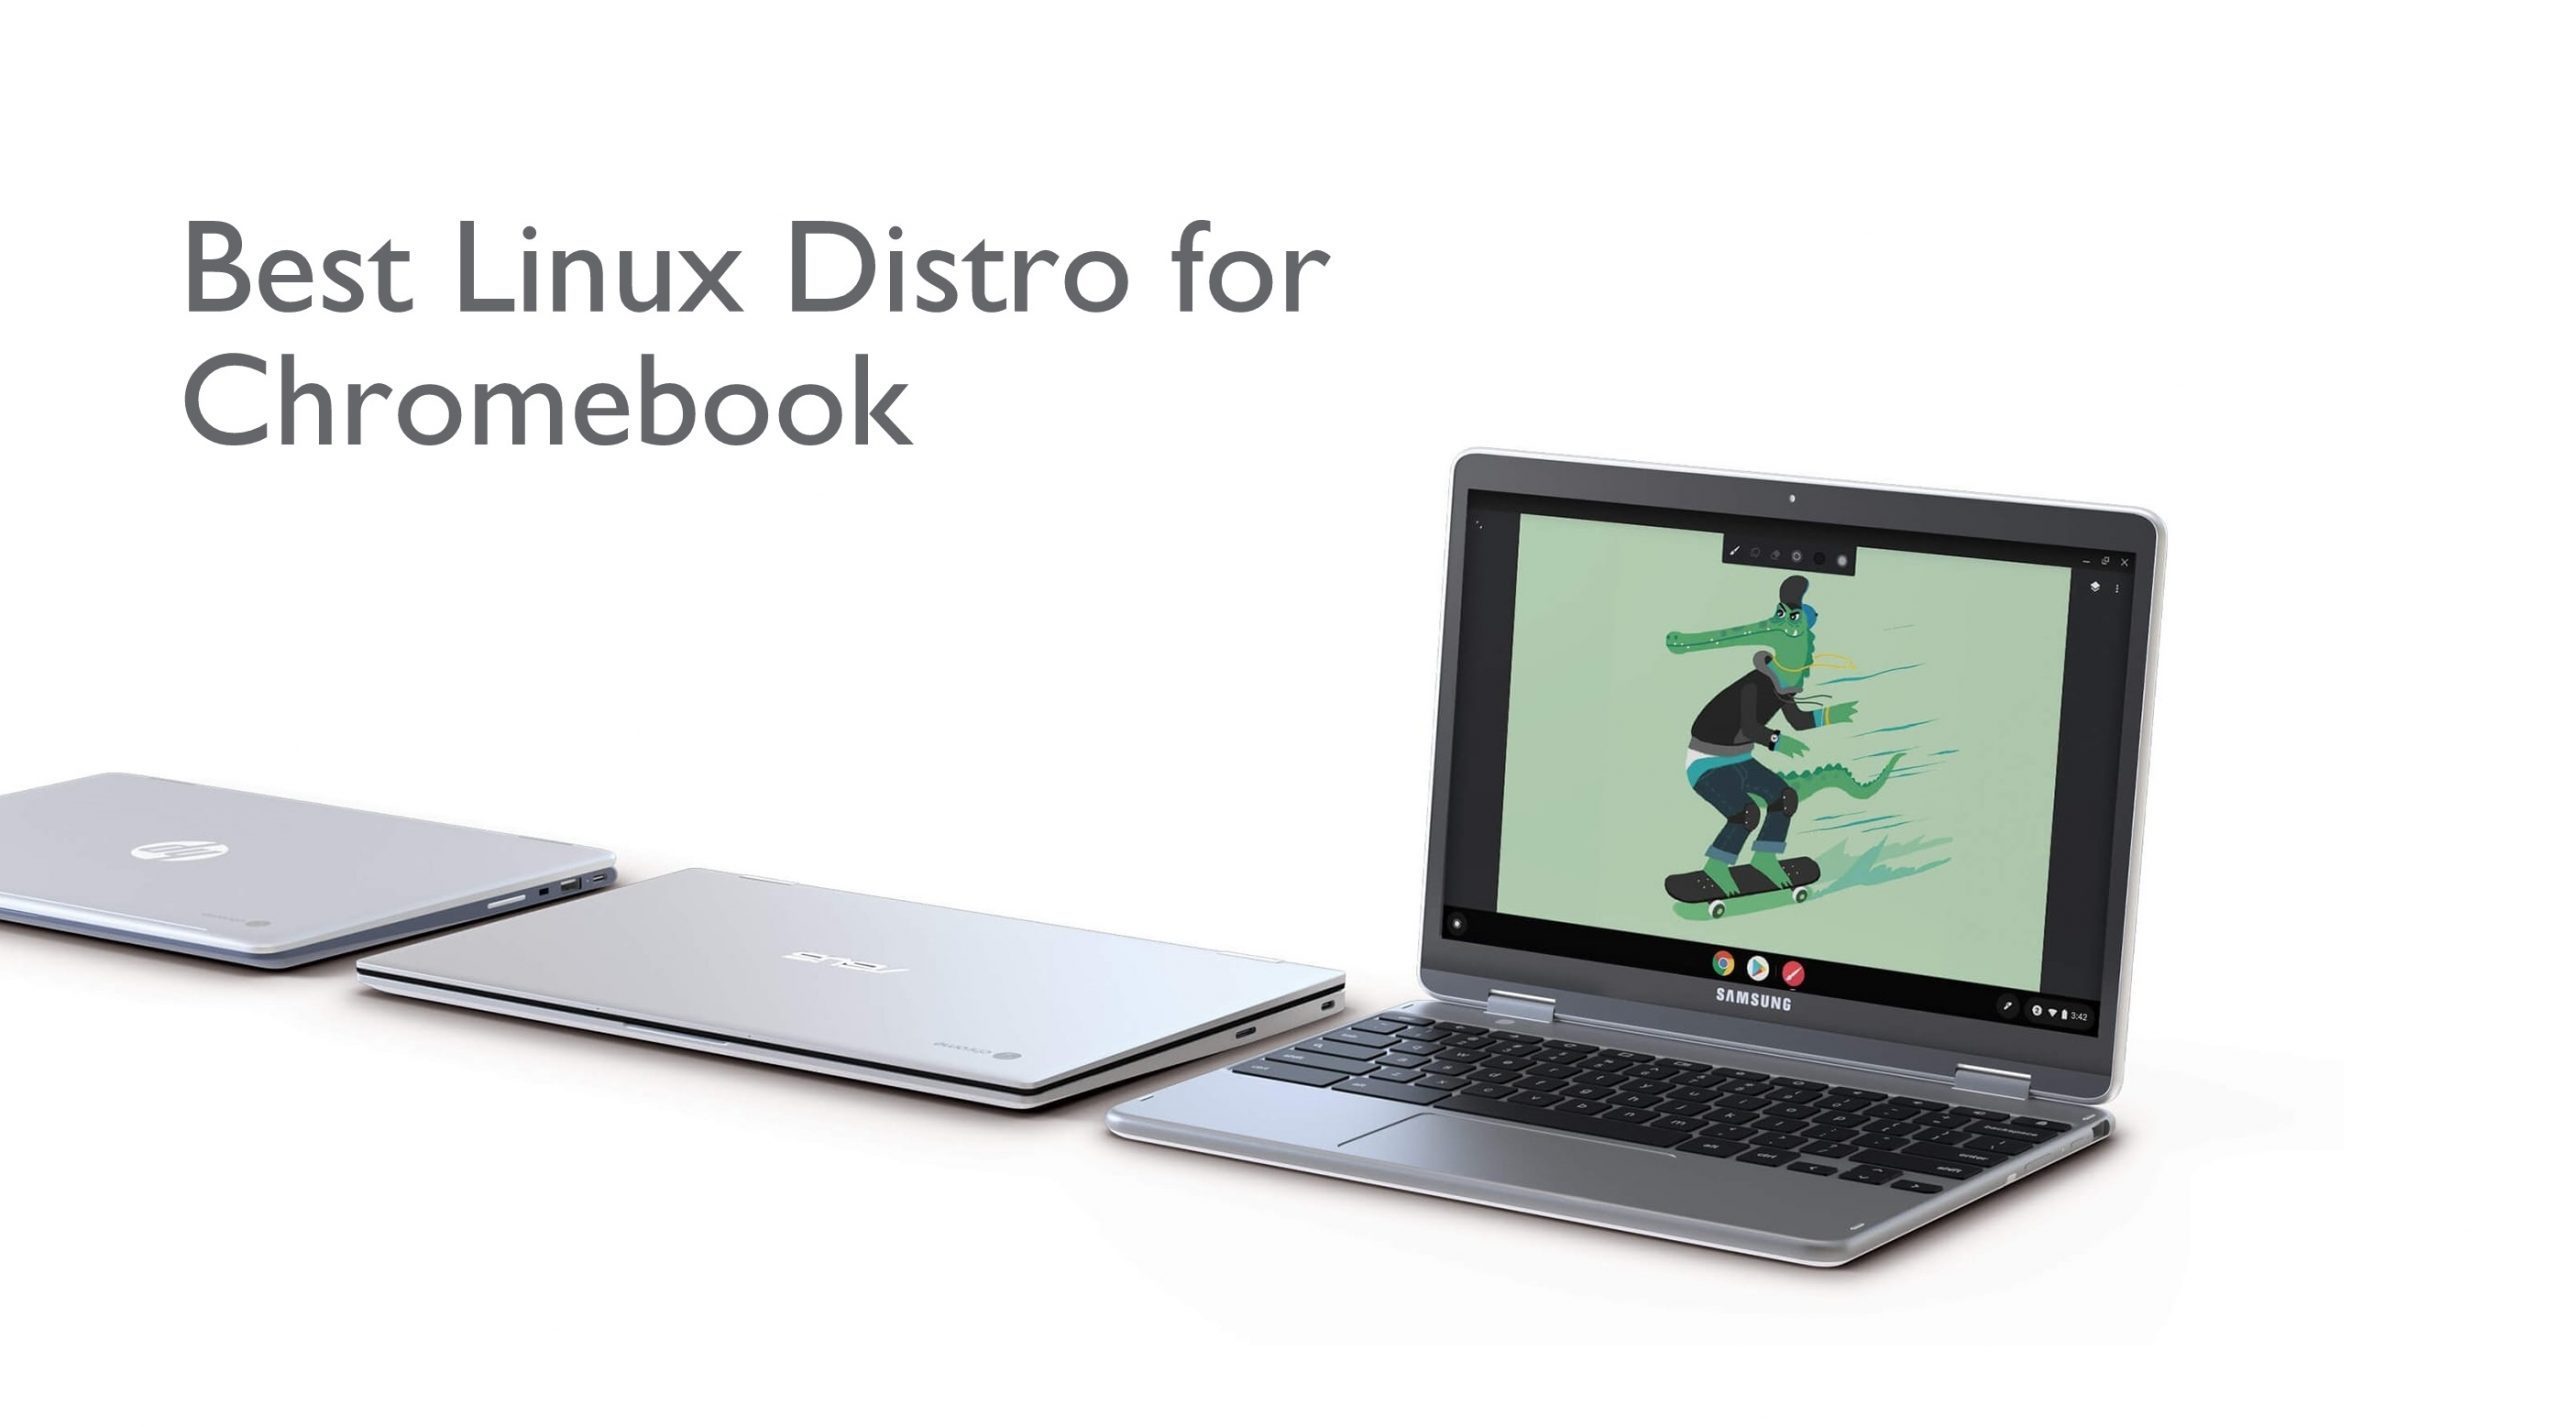 Chromebook-eko Linux Distro onena 2020an
